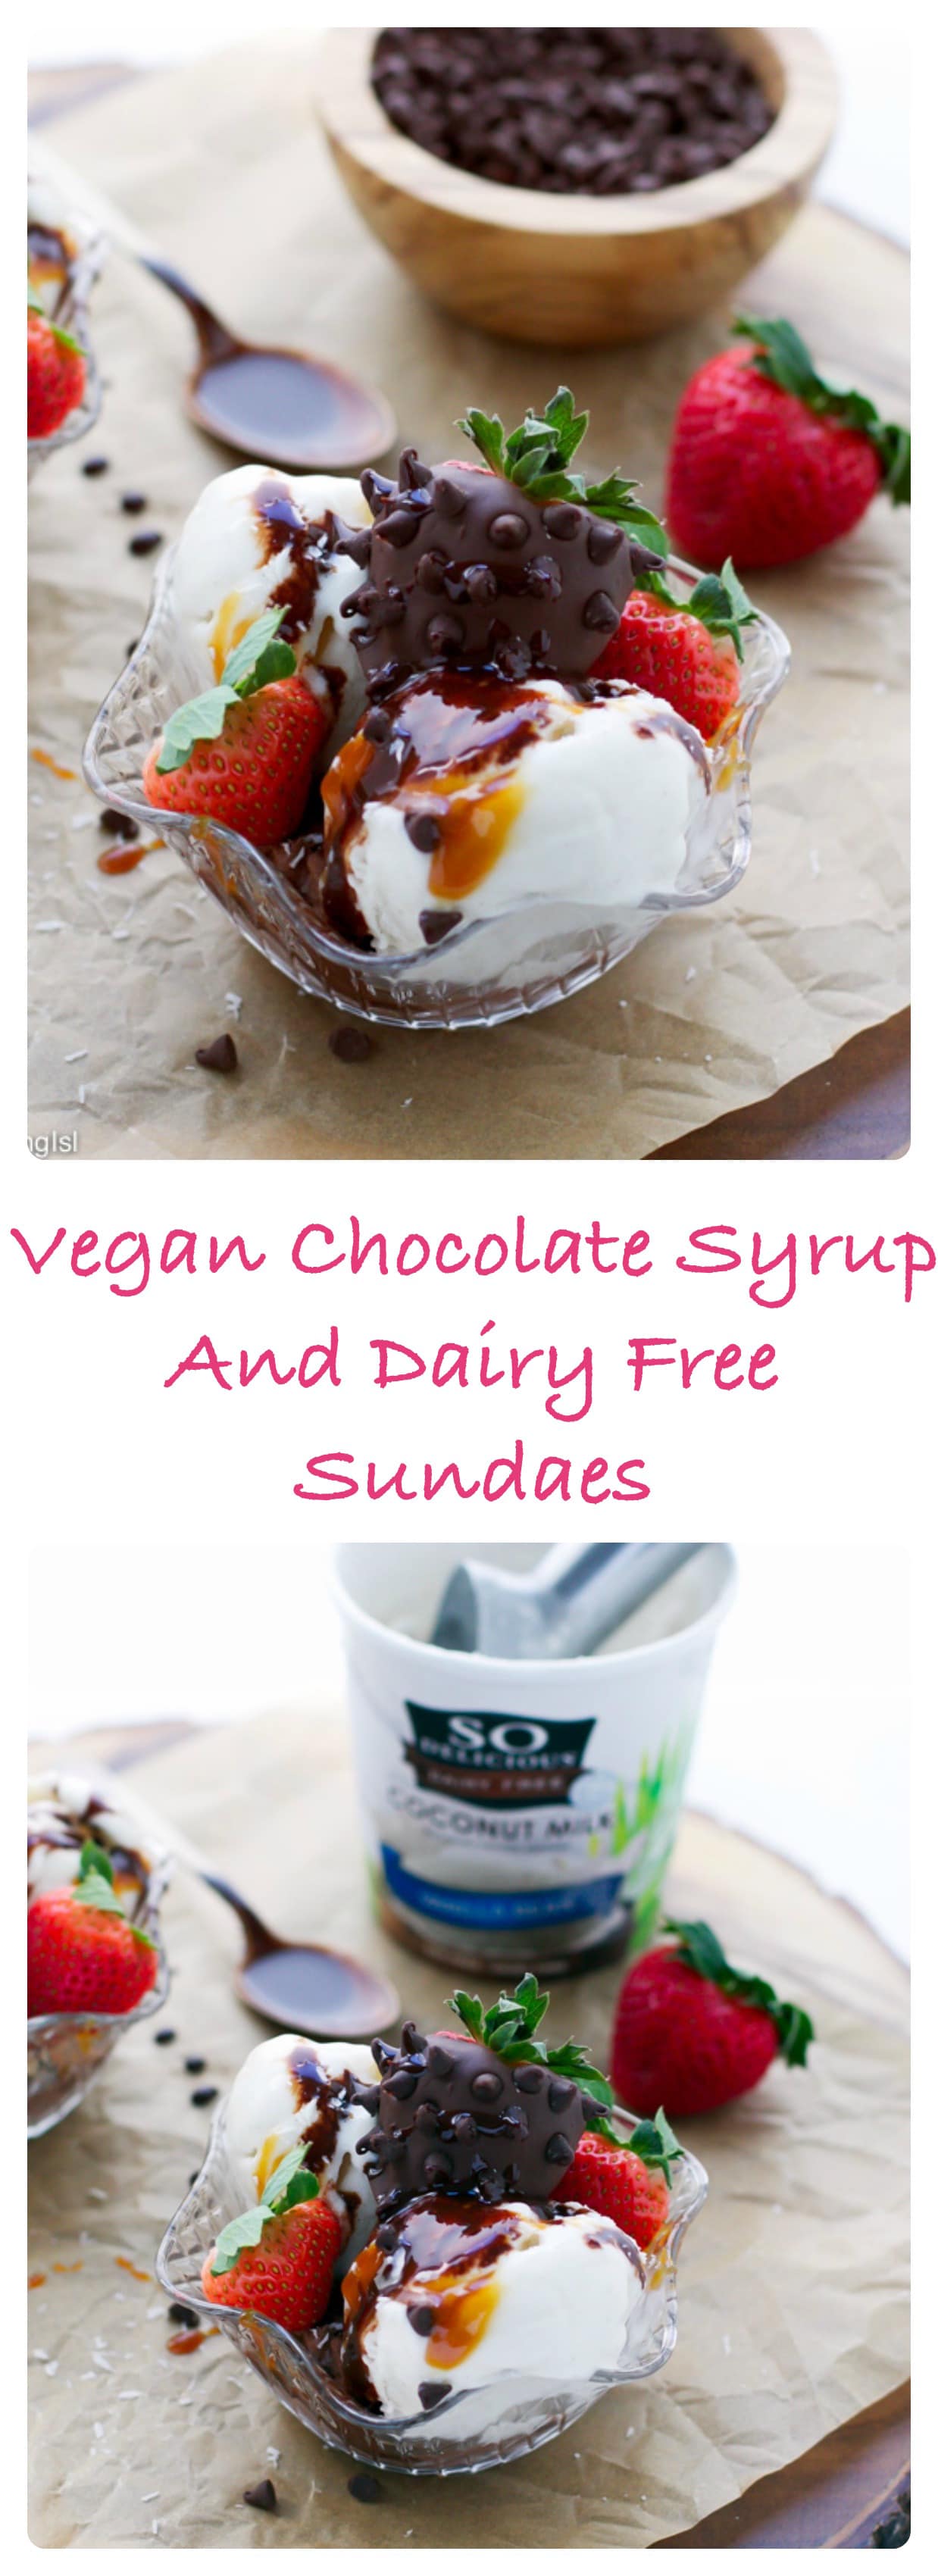 vegan-chocolate-syrup-so-delicious-dairy-free-frozen-treats-sundaes